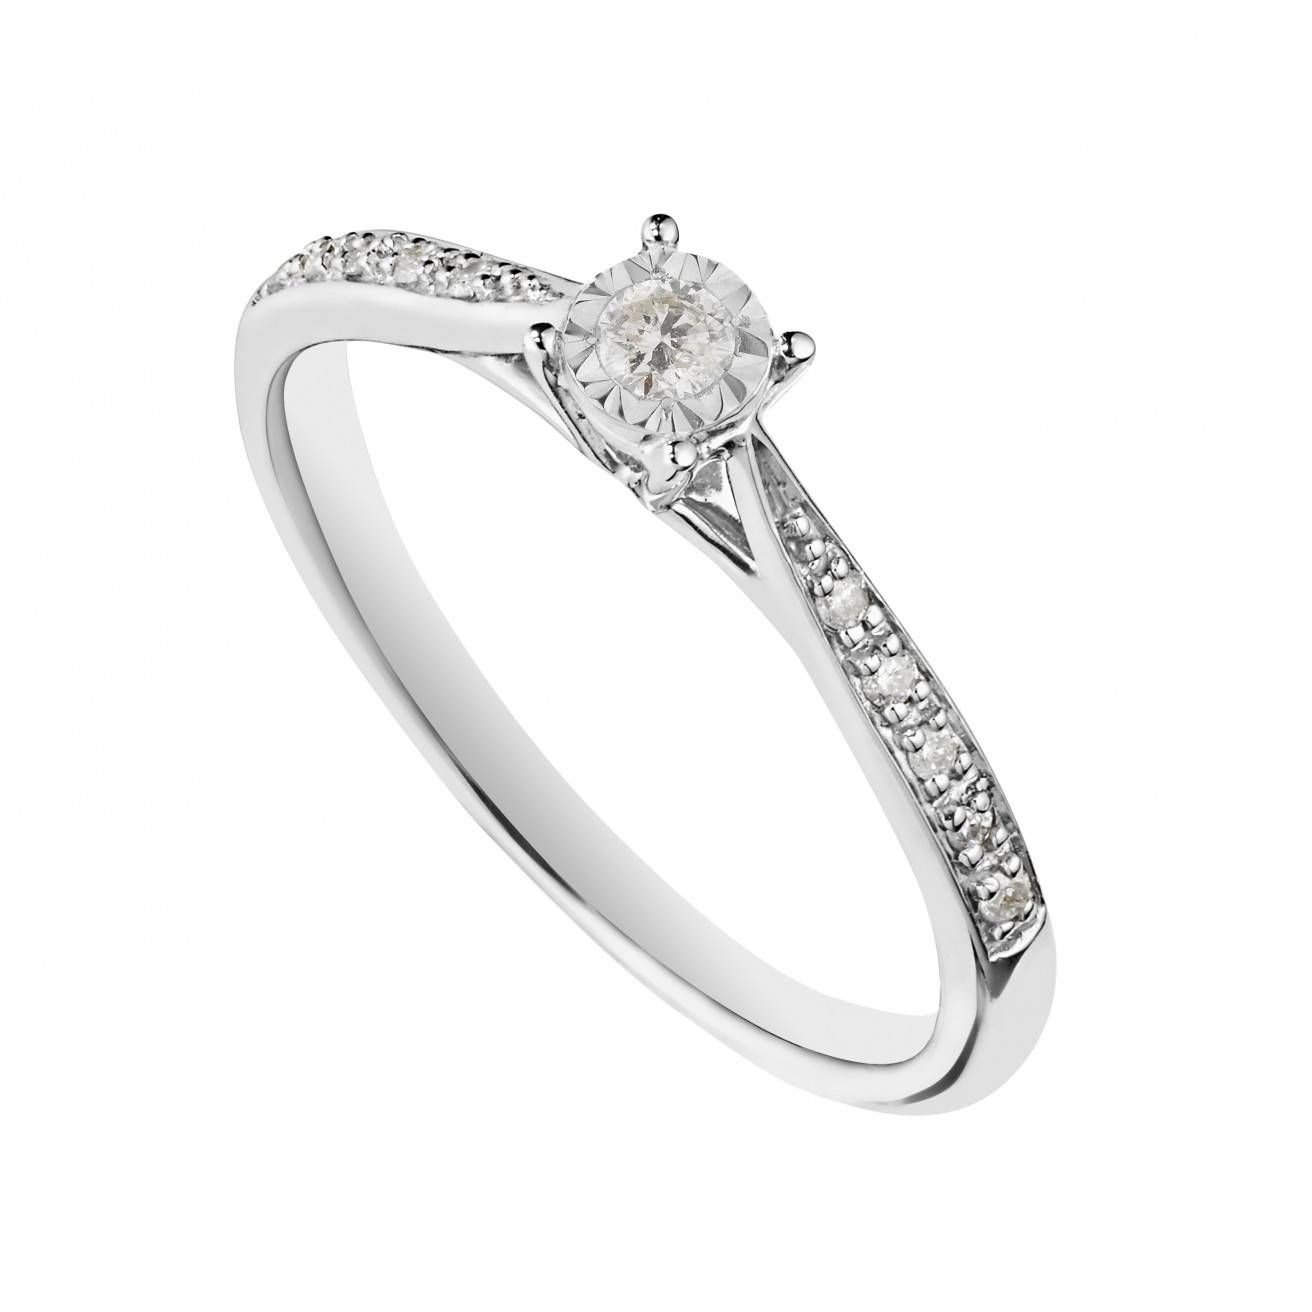 Buy A White Gold Engagement Ring – Fraser Hart Inside White Gold Engagement Rings (View 5 of 15)